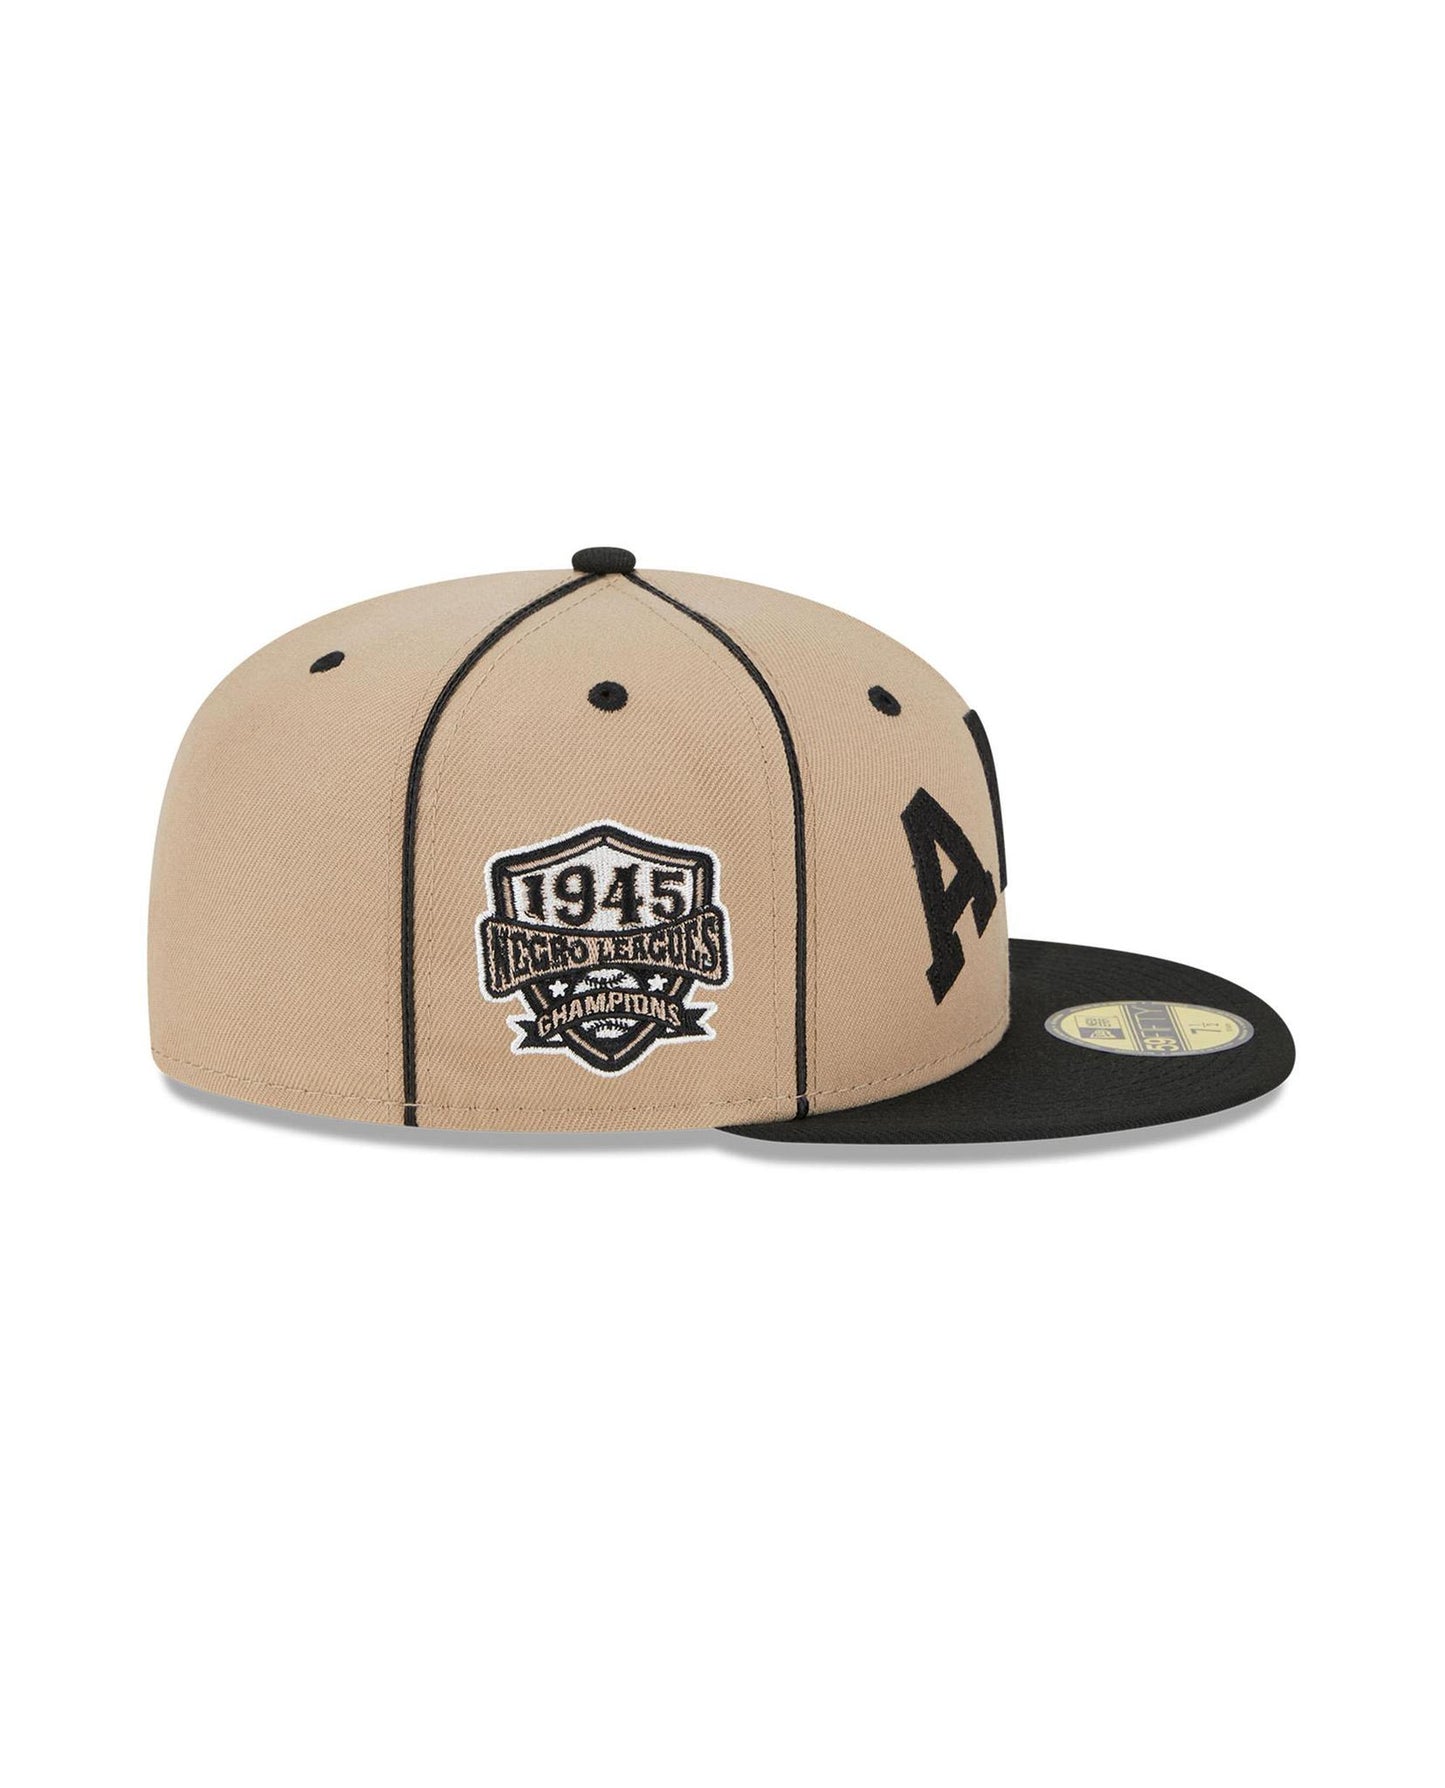 New Era, Accessories, San Diego Padres Camo New Era 9fifty Snapback Hat